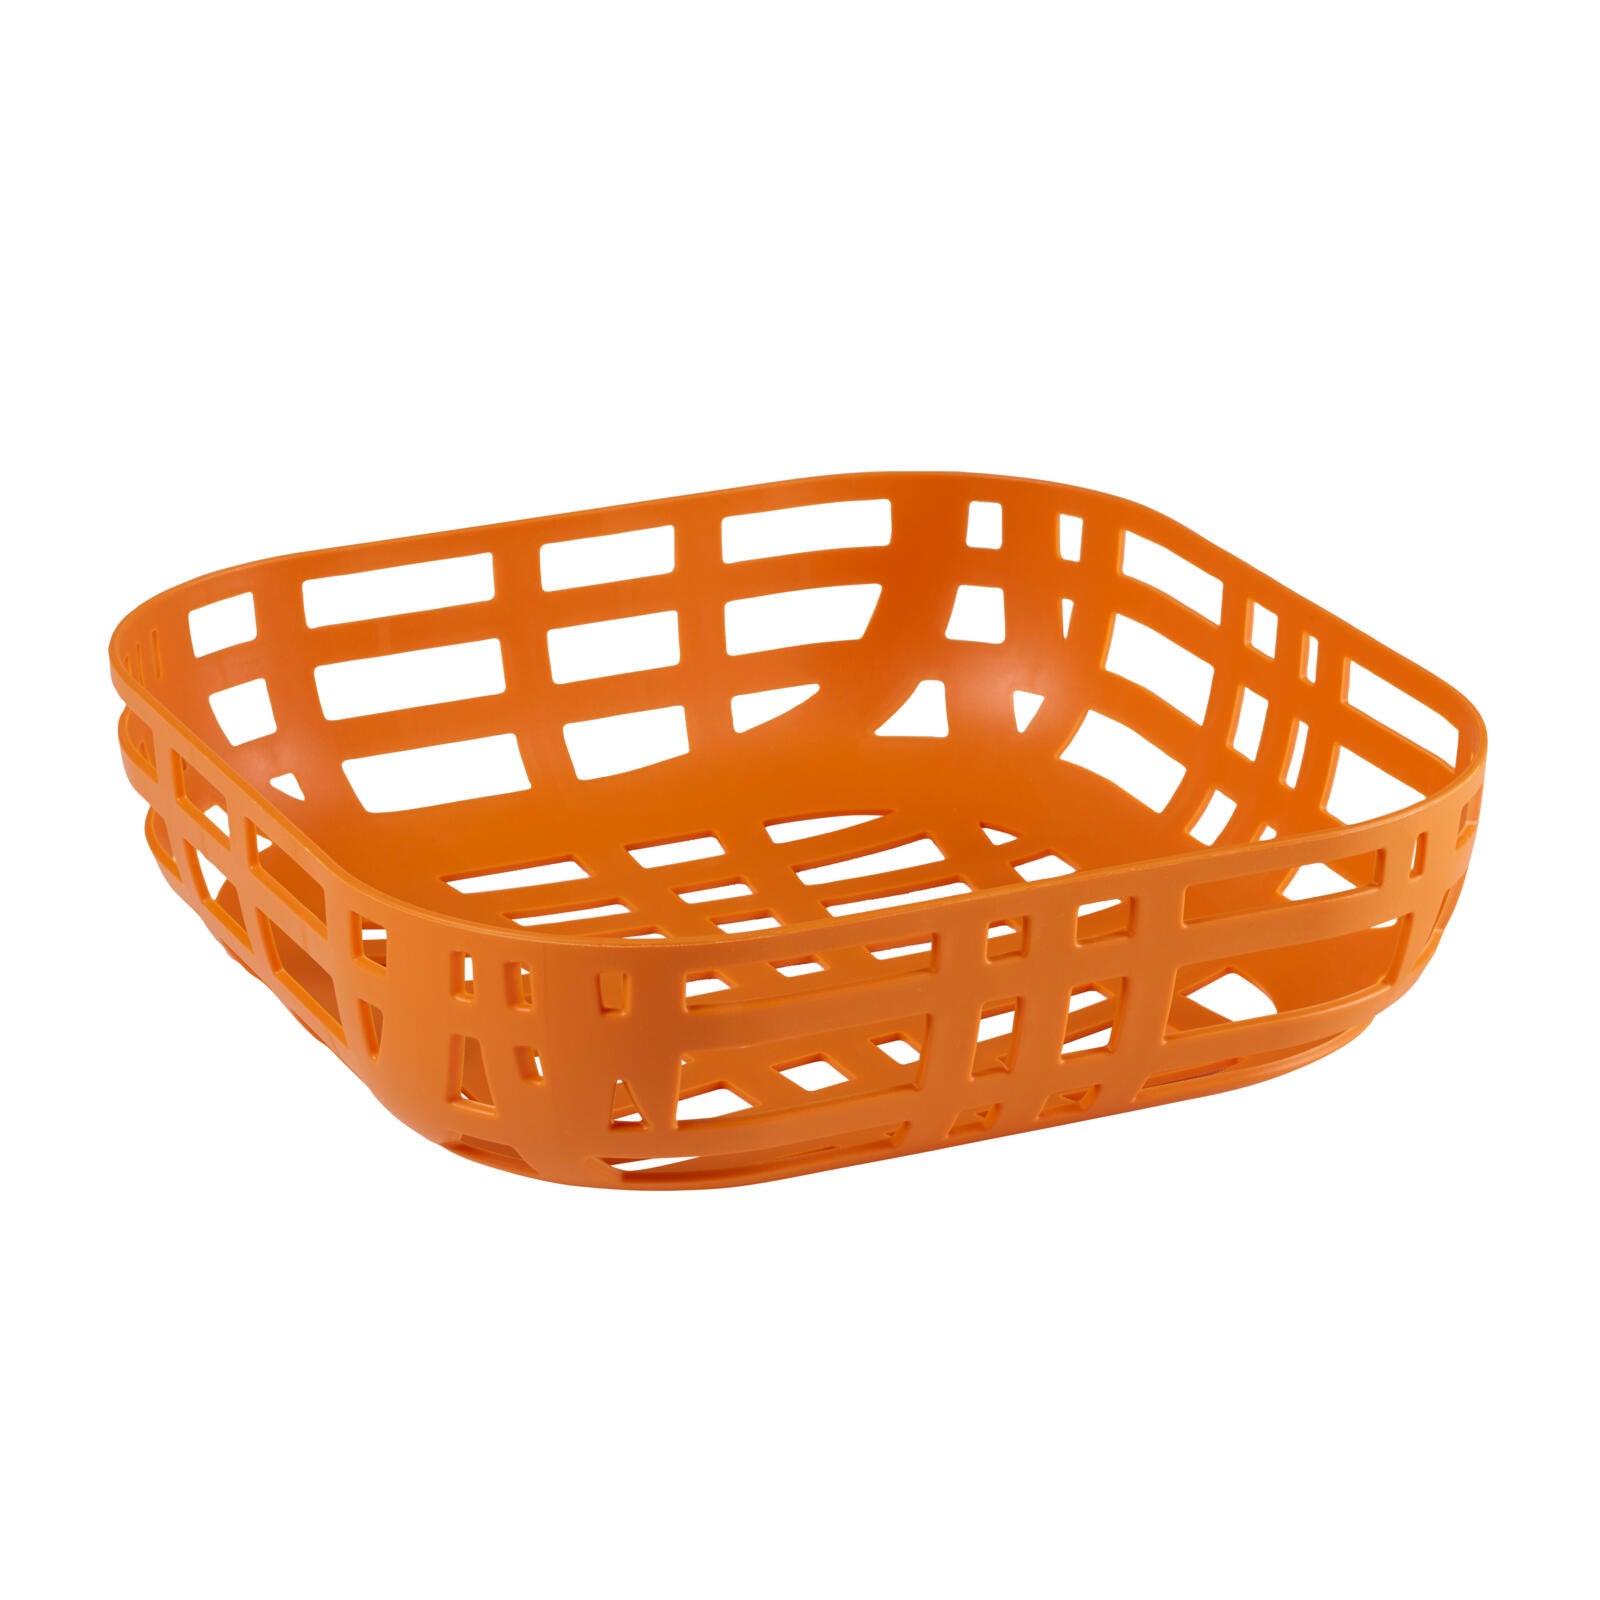 GEOMETRIC Orange fruit basket